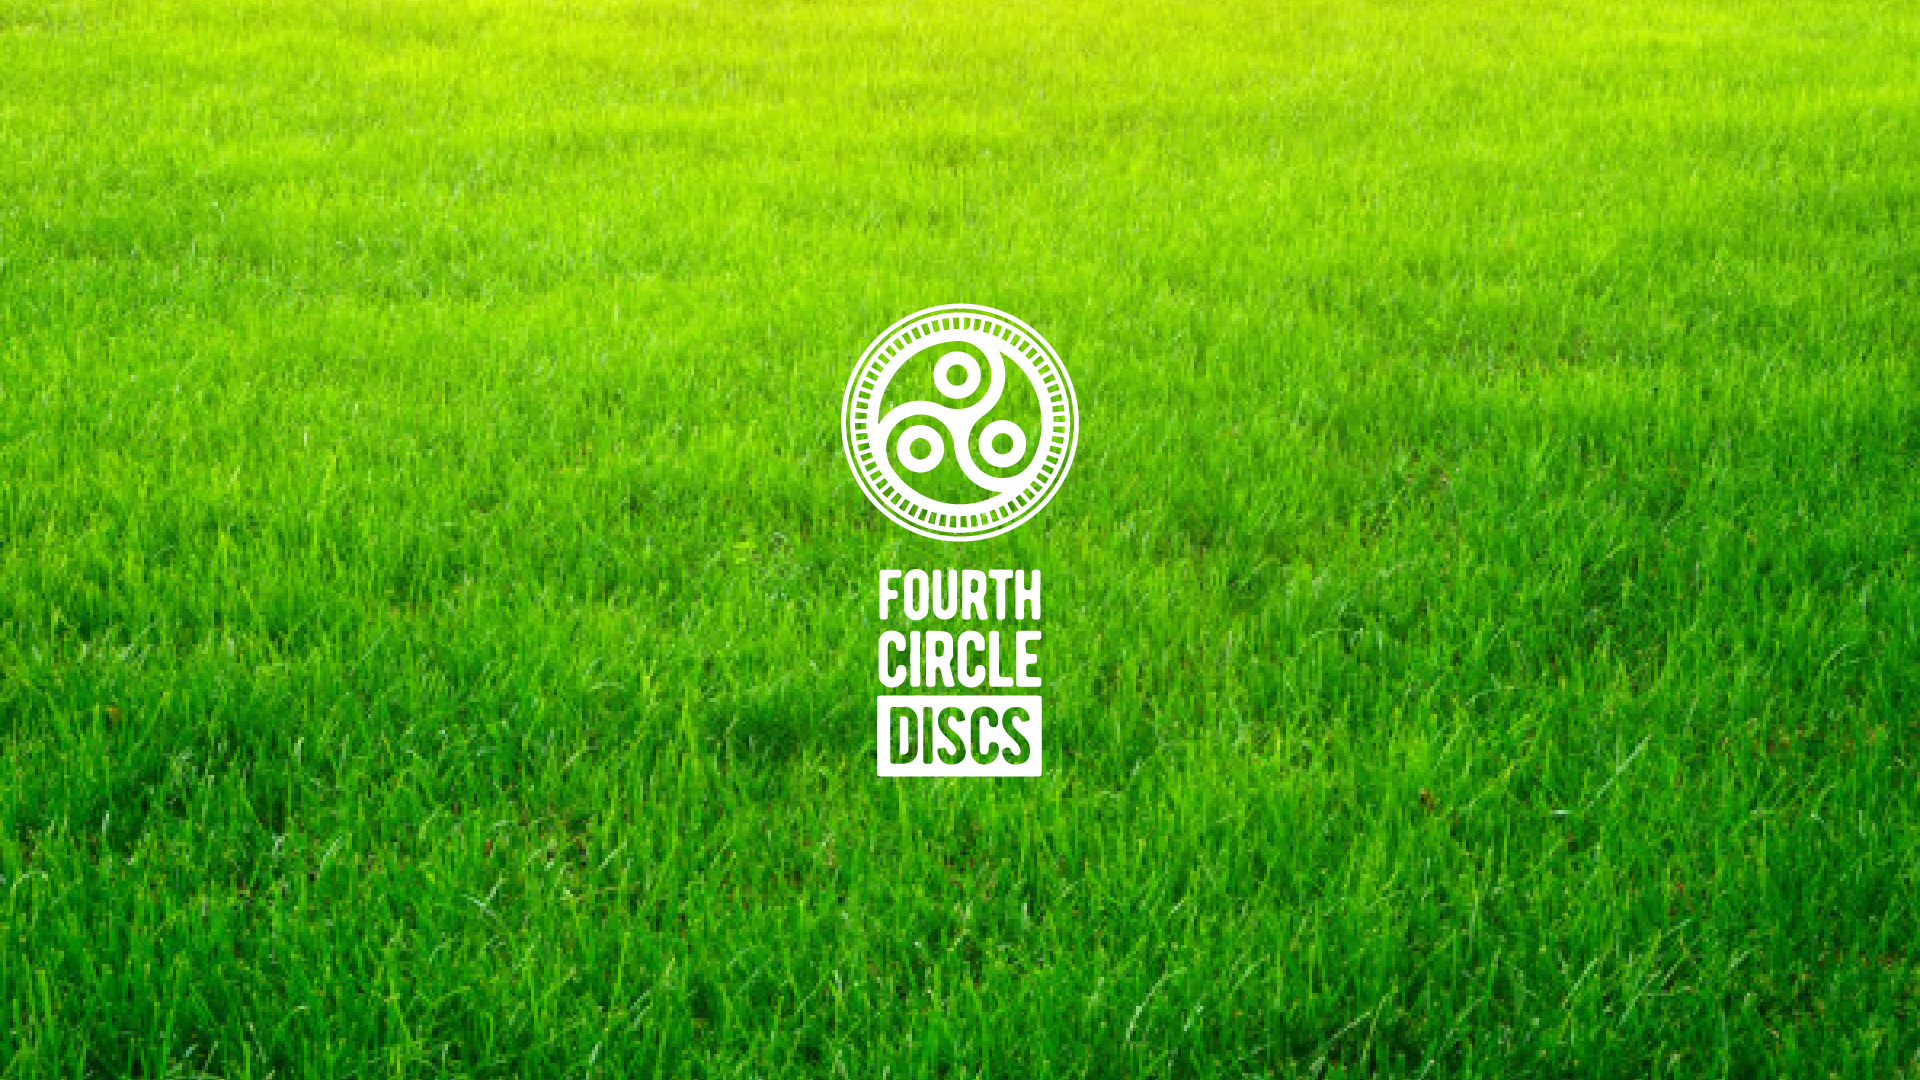 Fourth Circle Discs logo on green grass